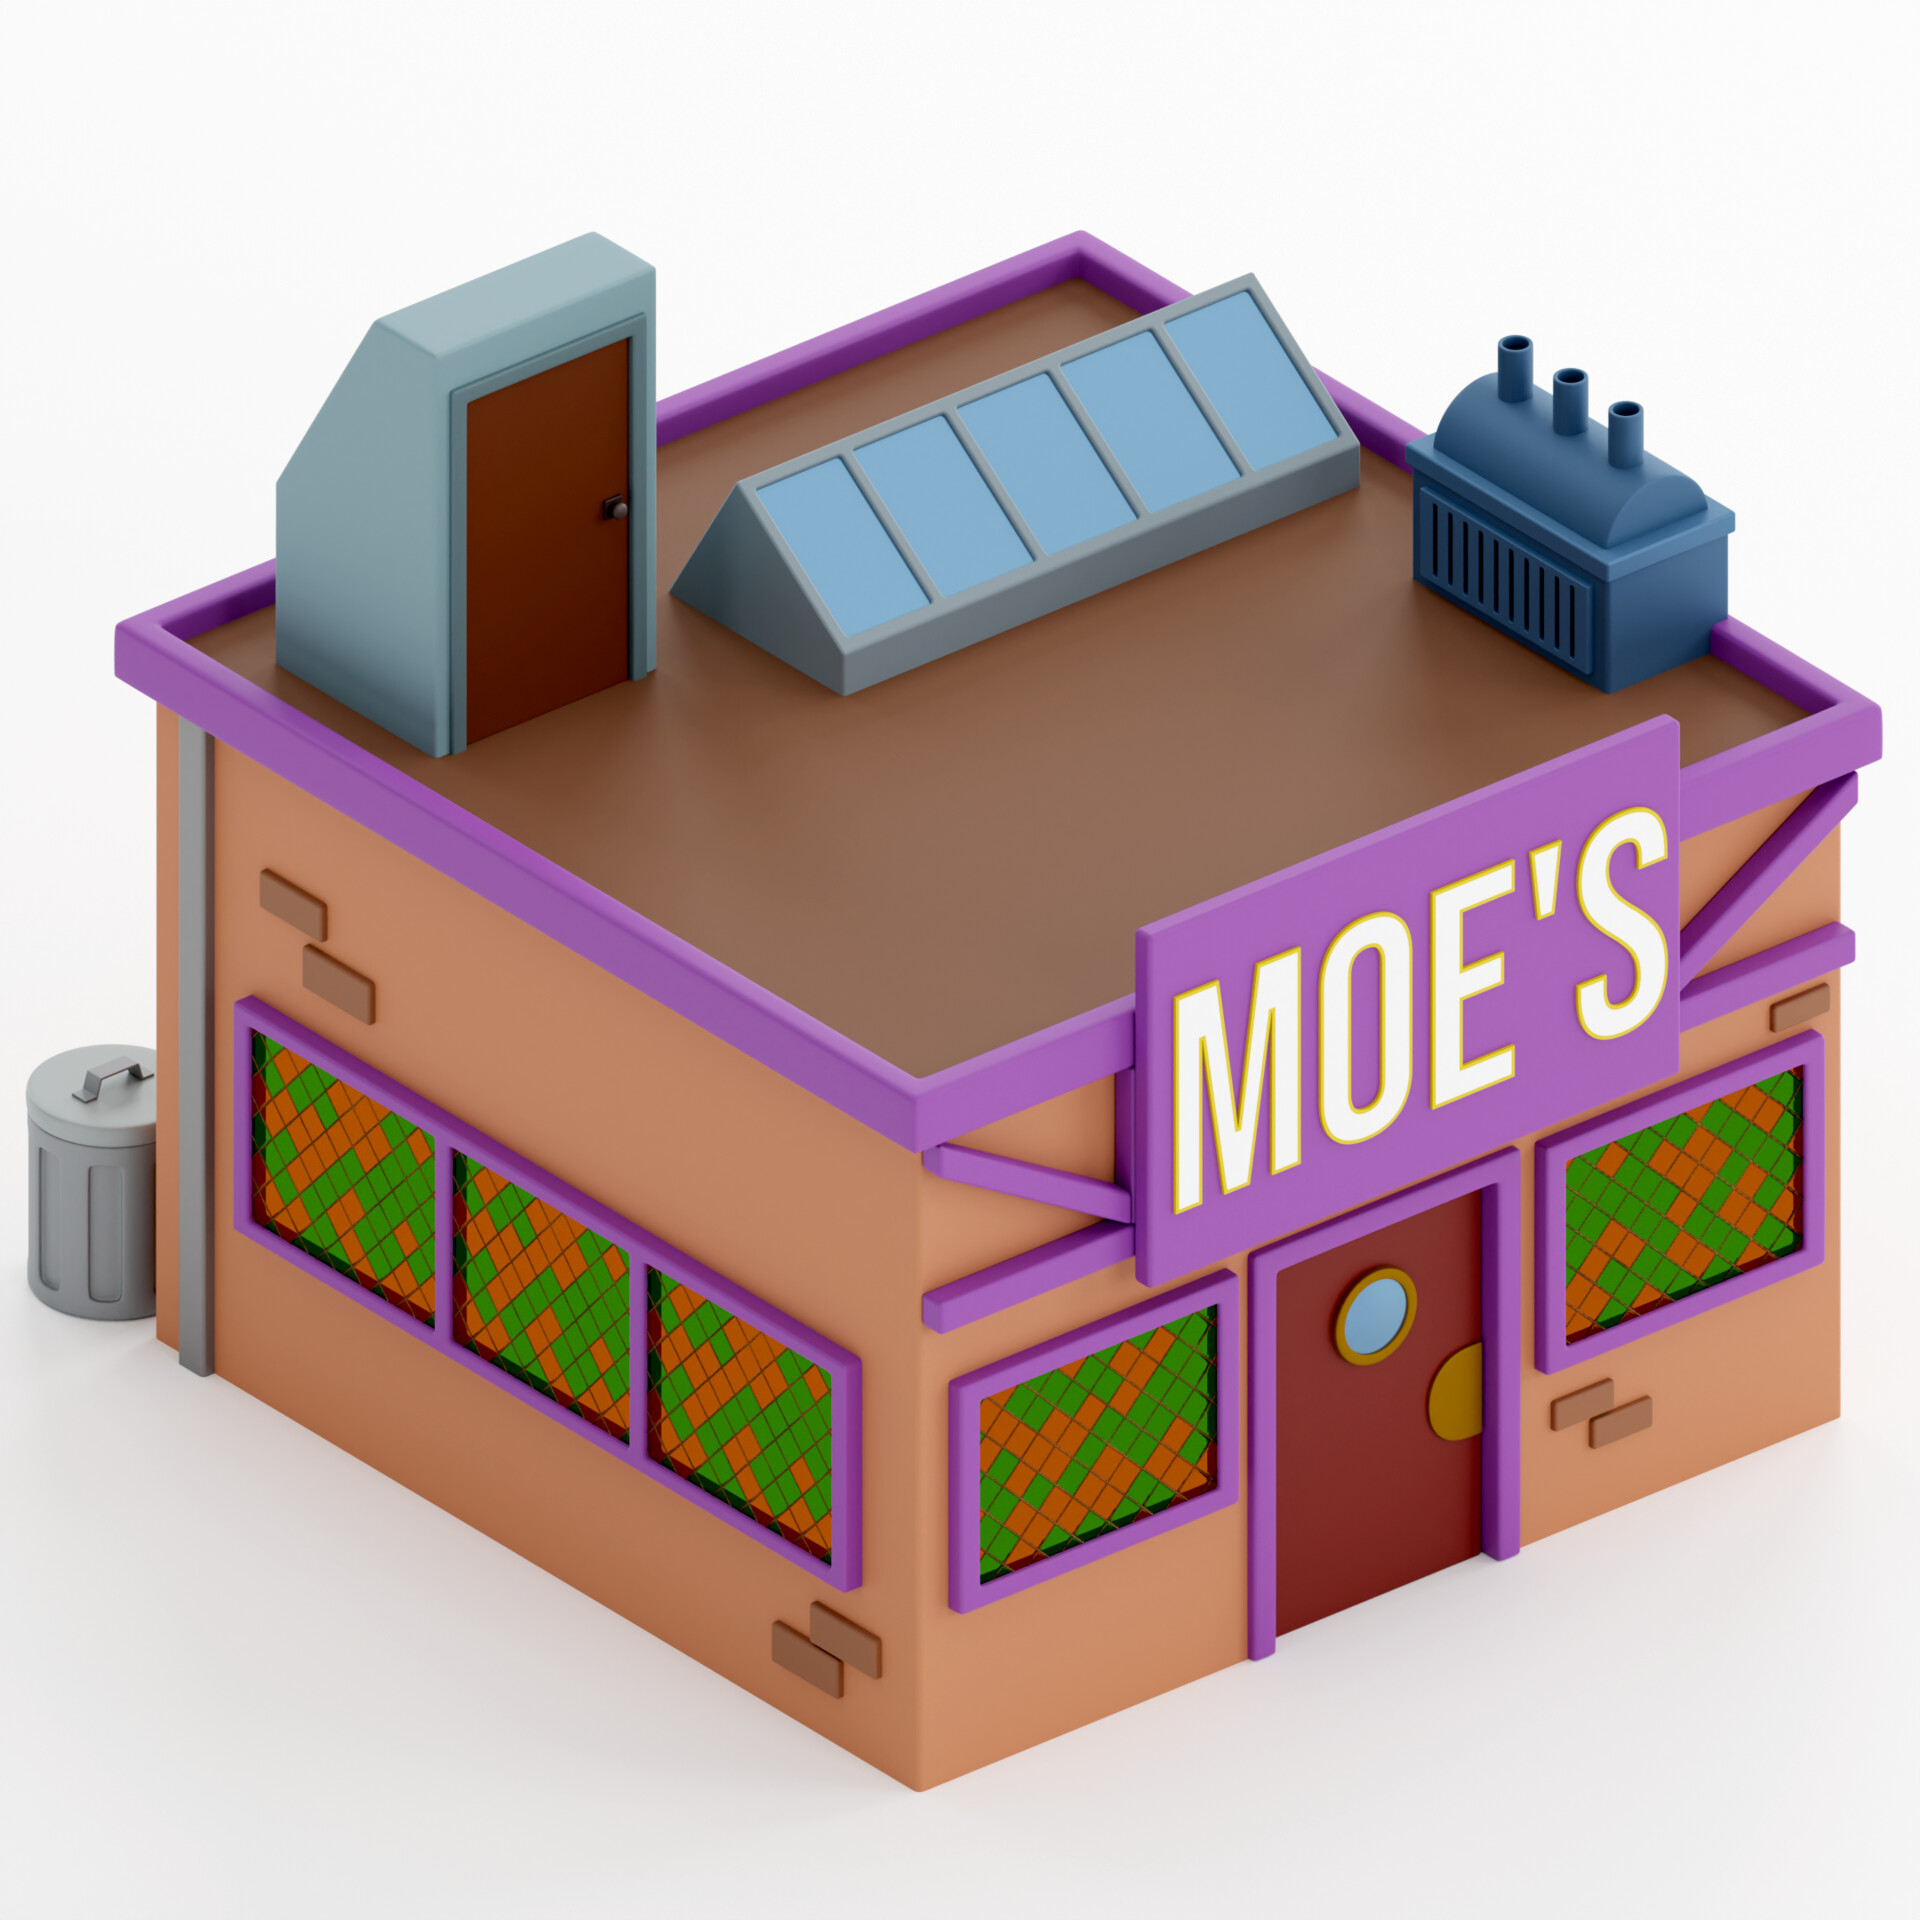 ArtStation - Moe's Tavern